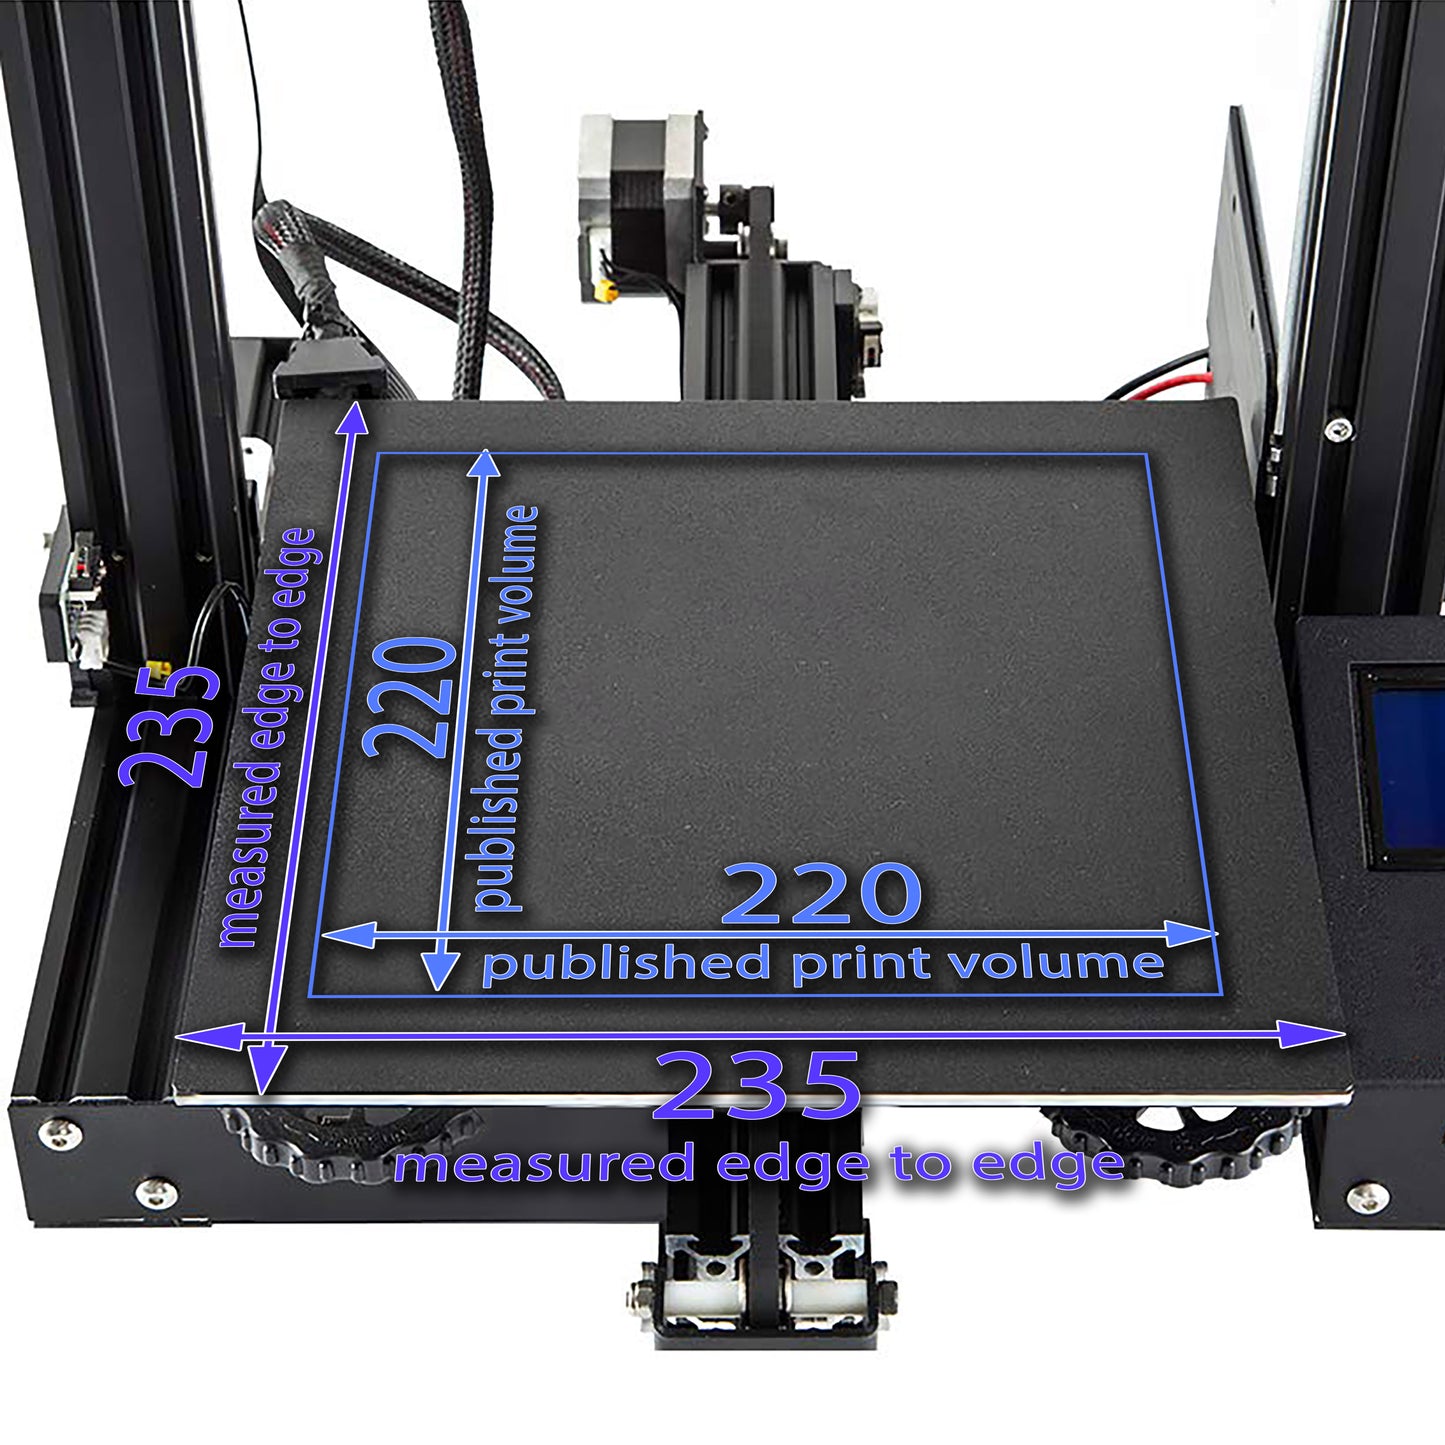 300 x 300 Kit with Pre-Installed PEX Build Surface - LulzBot Taz Pro & Taz Workhorse, & Taz 3, 4, 5, 6